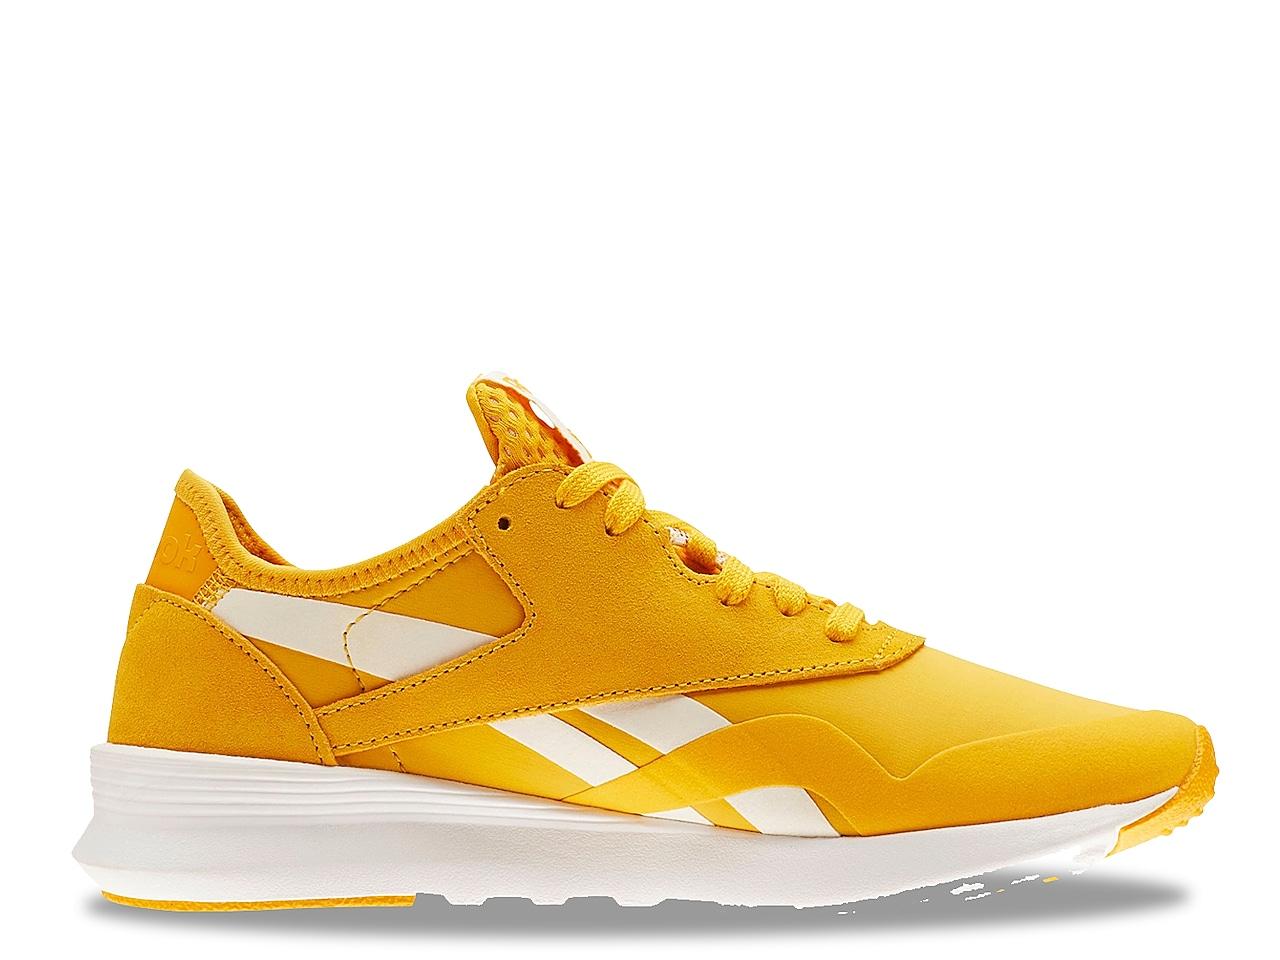 Reebok Synthetic Classic Nylon Sp Sneaker in Mustard Yellow (Yellow) | Lyst